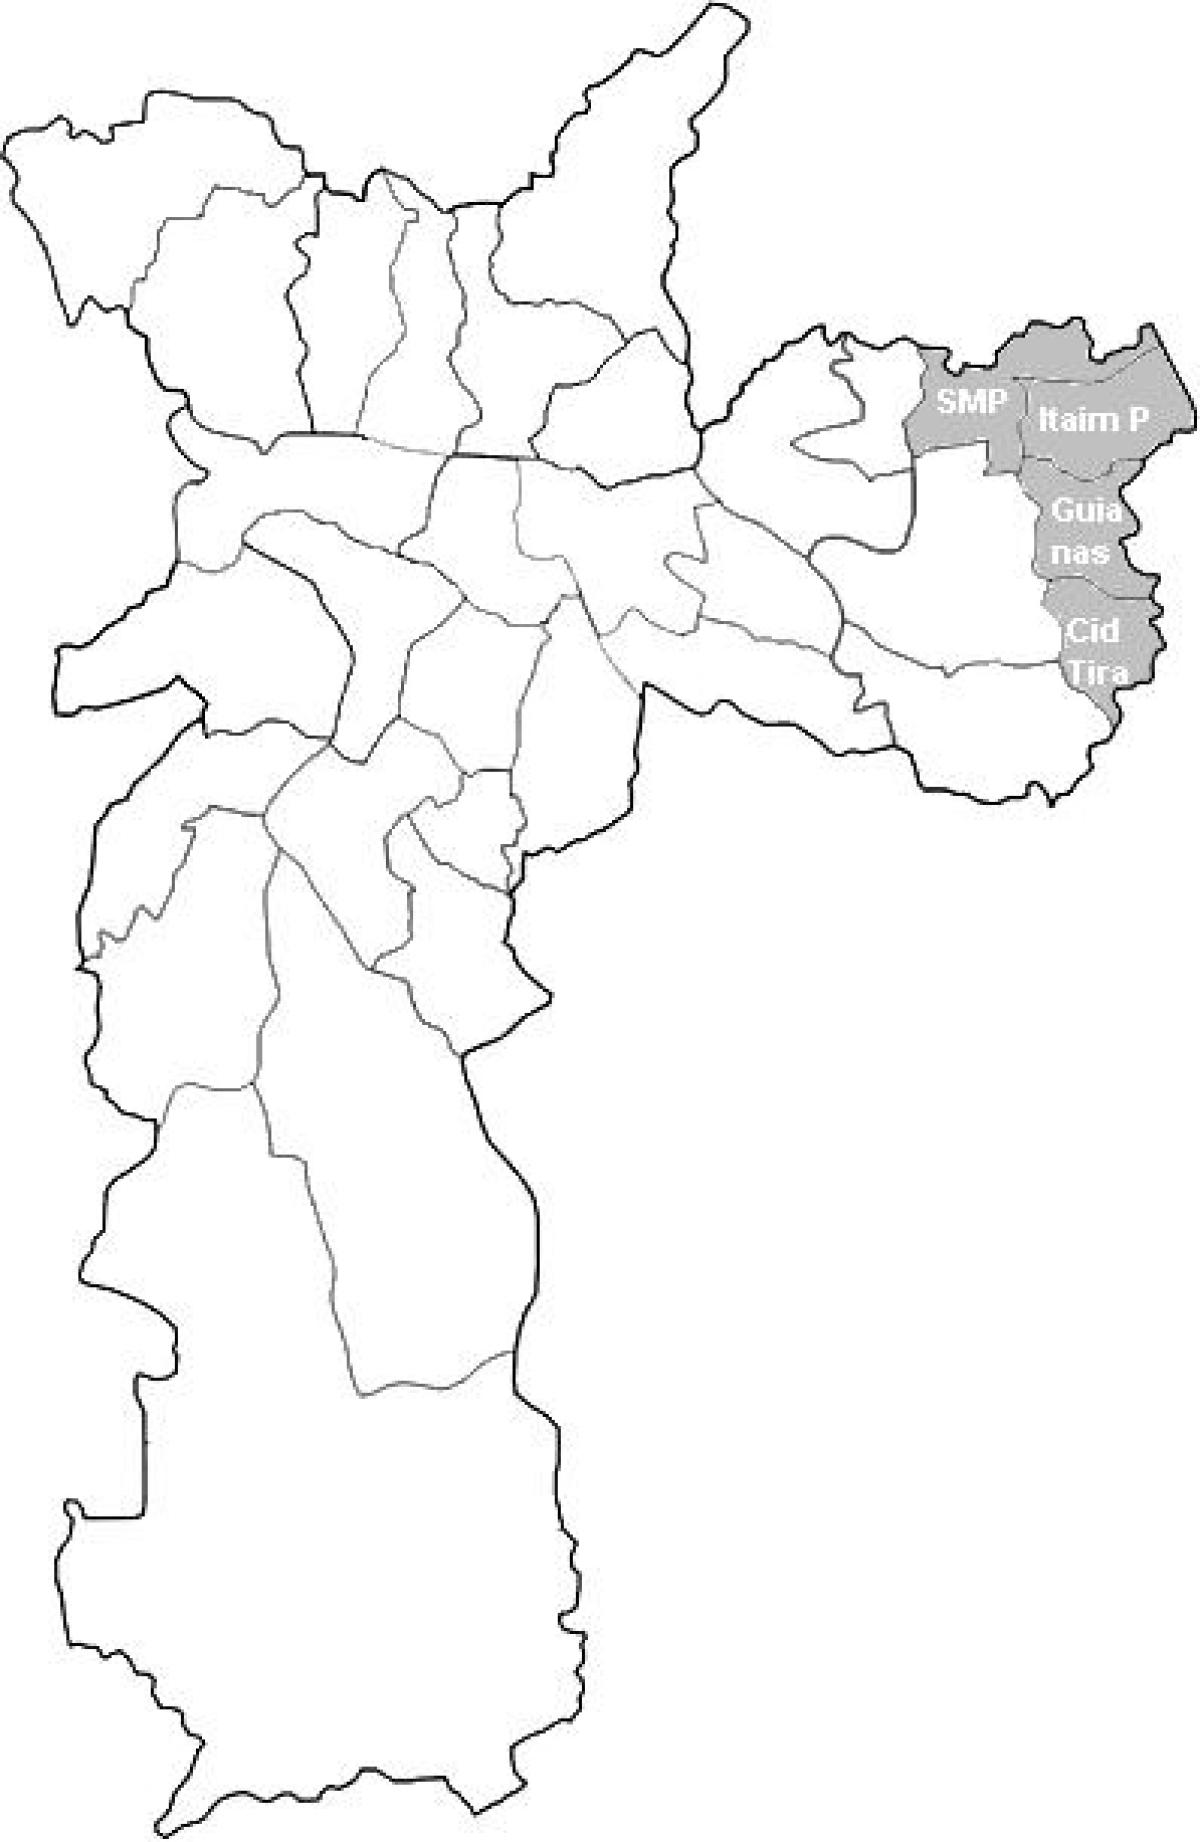 Карта на зона Leste 2 São Паоло